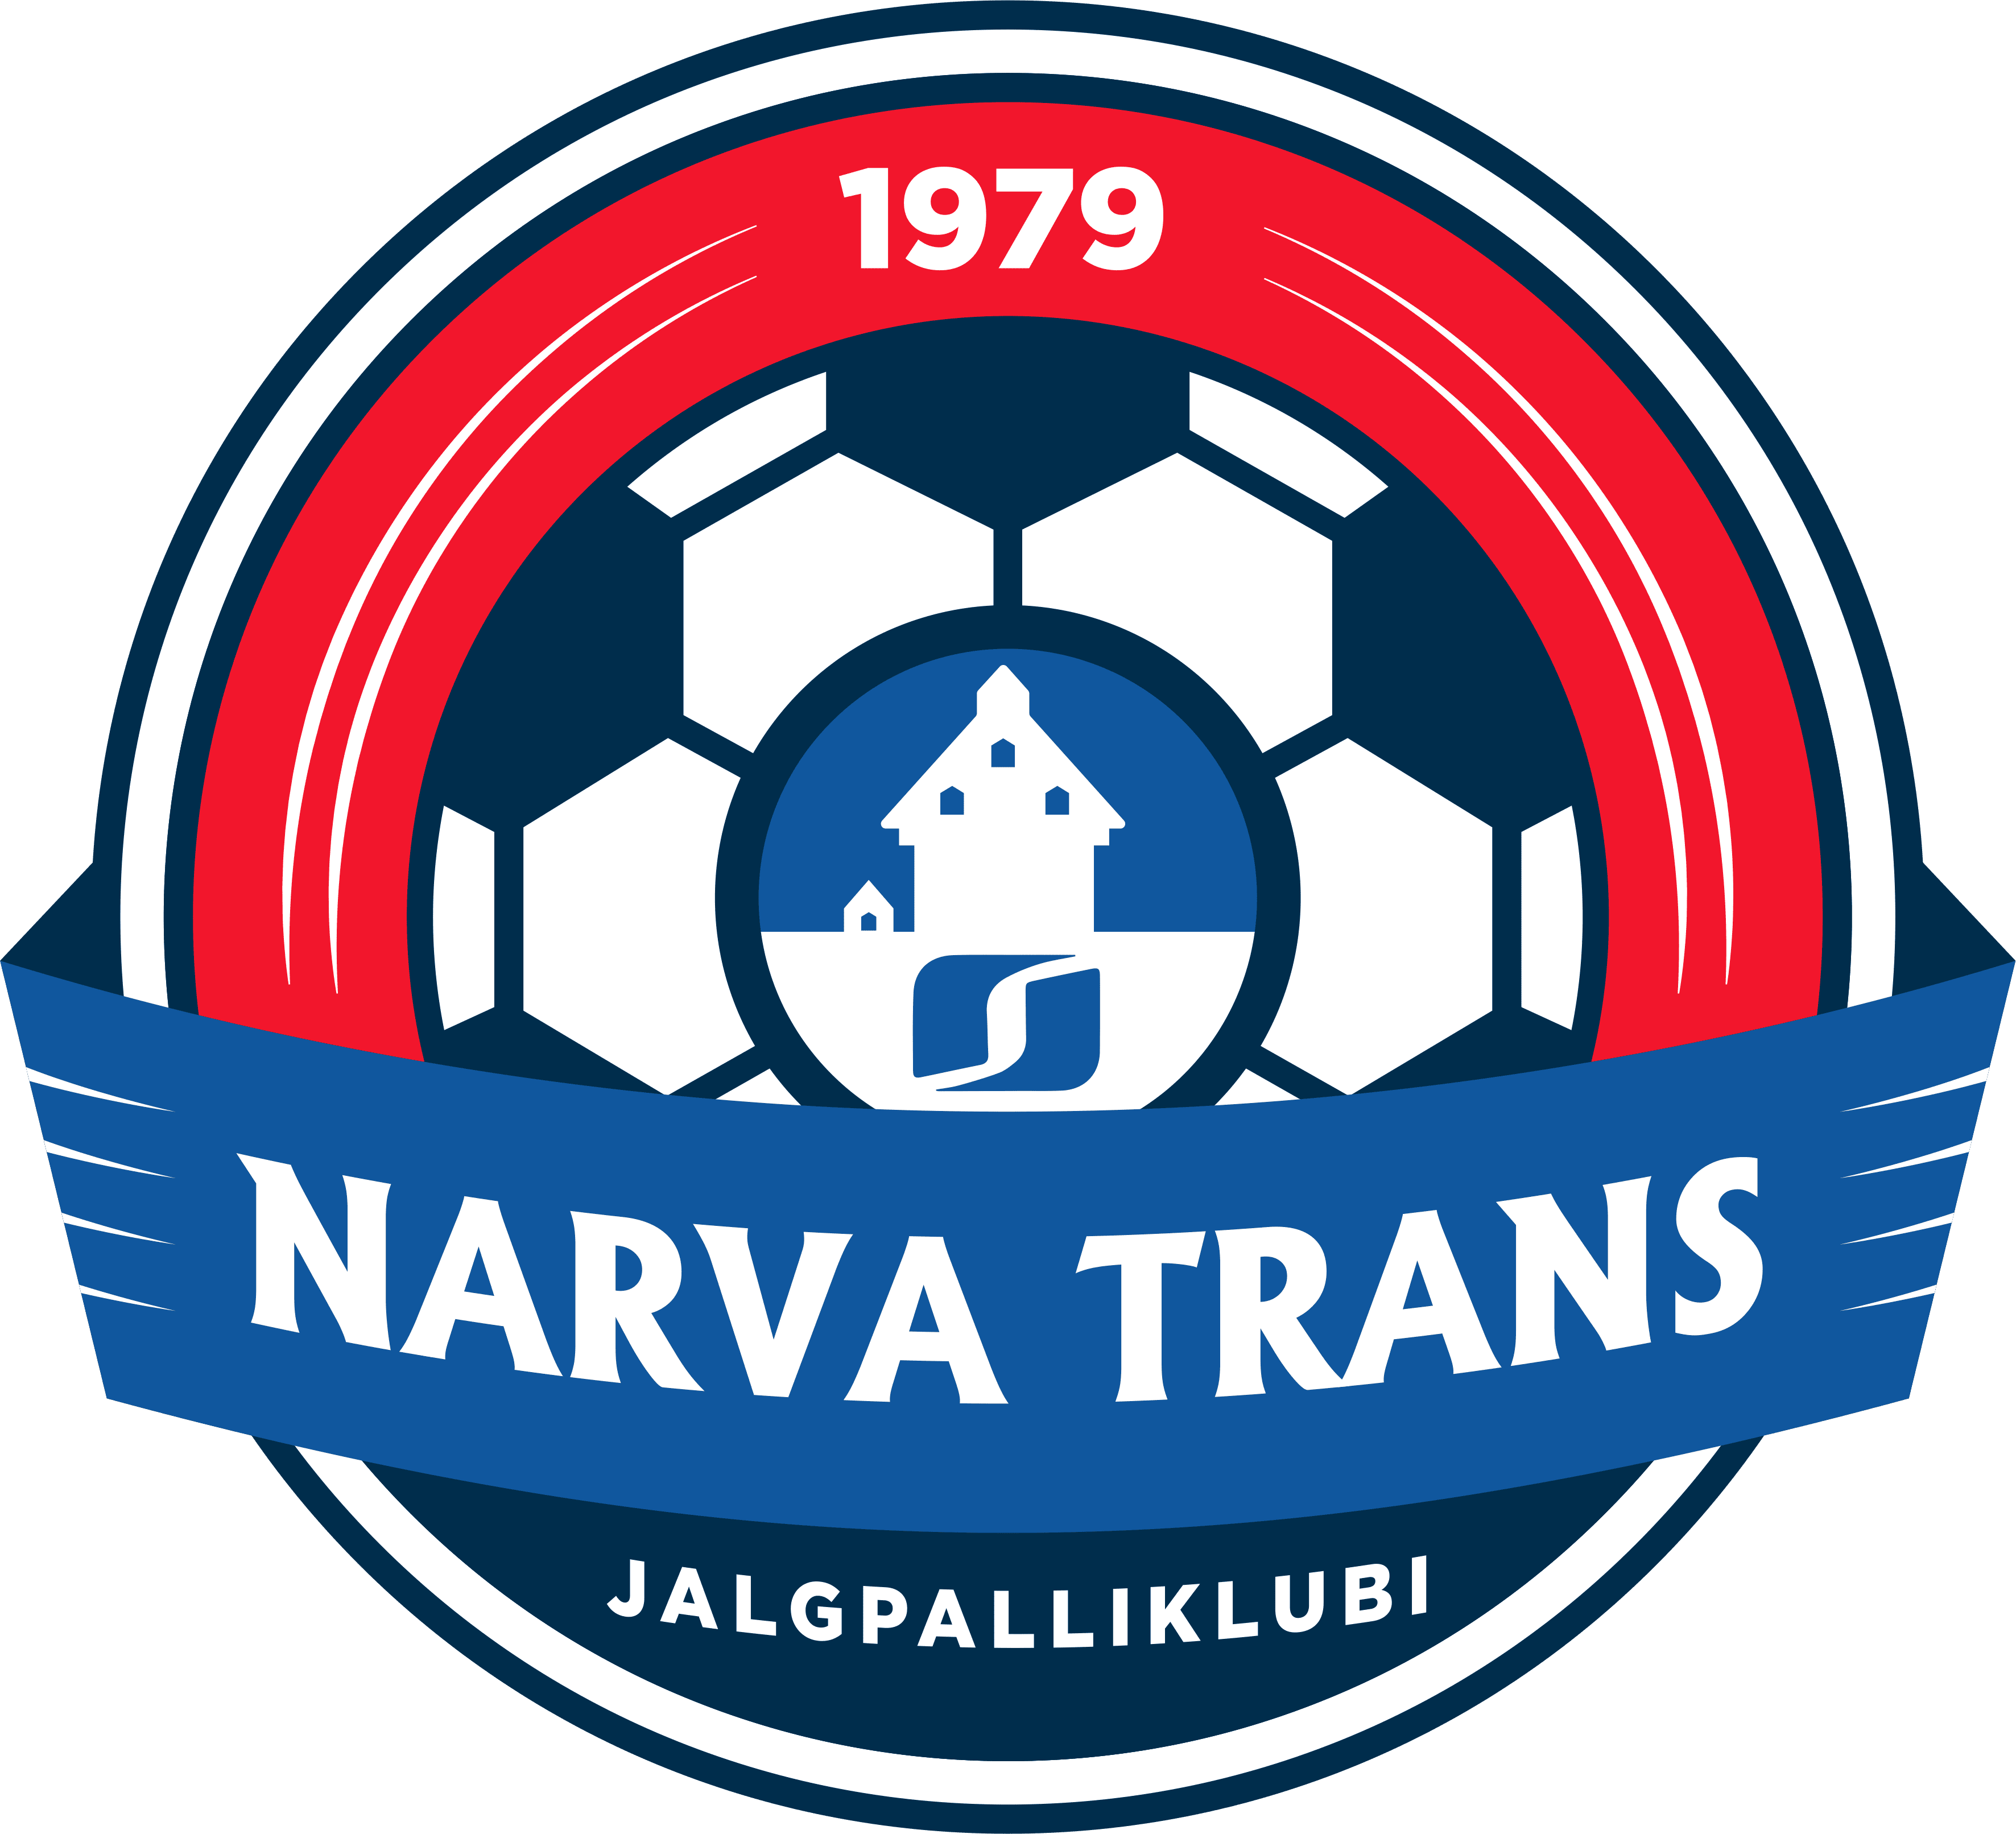 Narva Trans